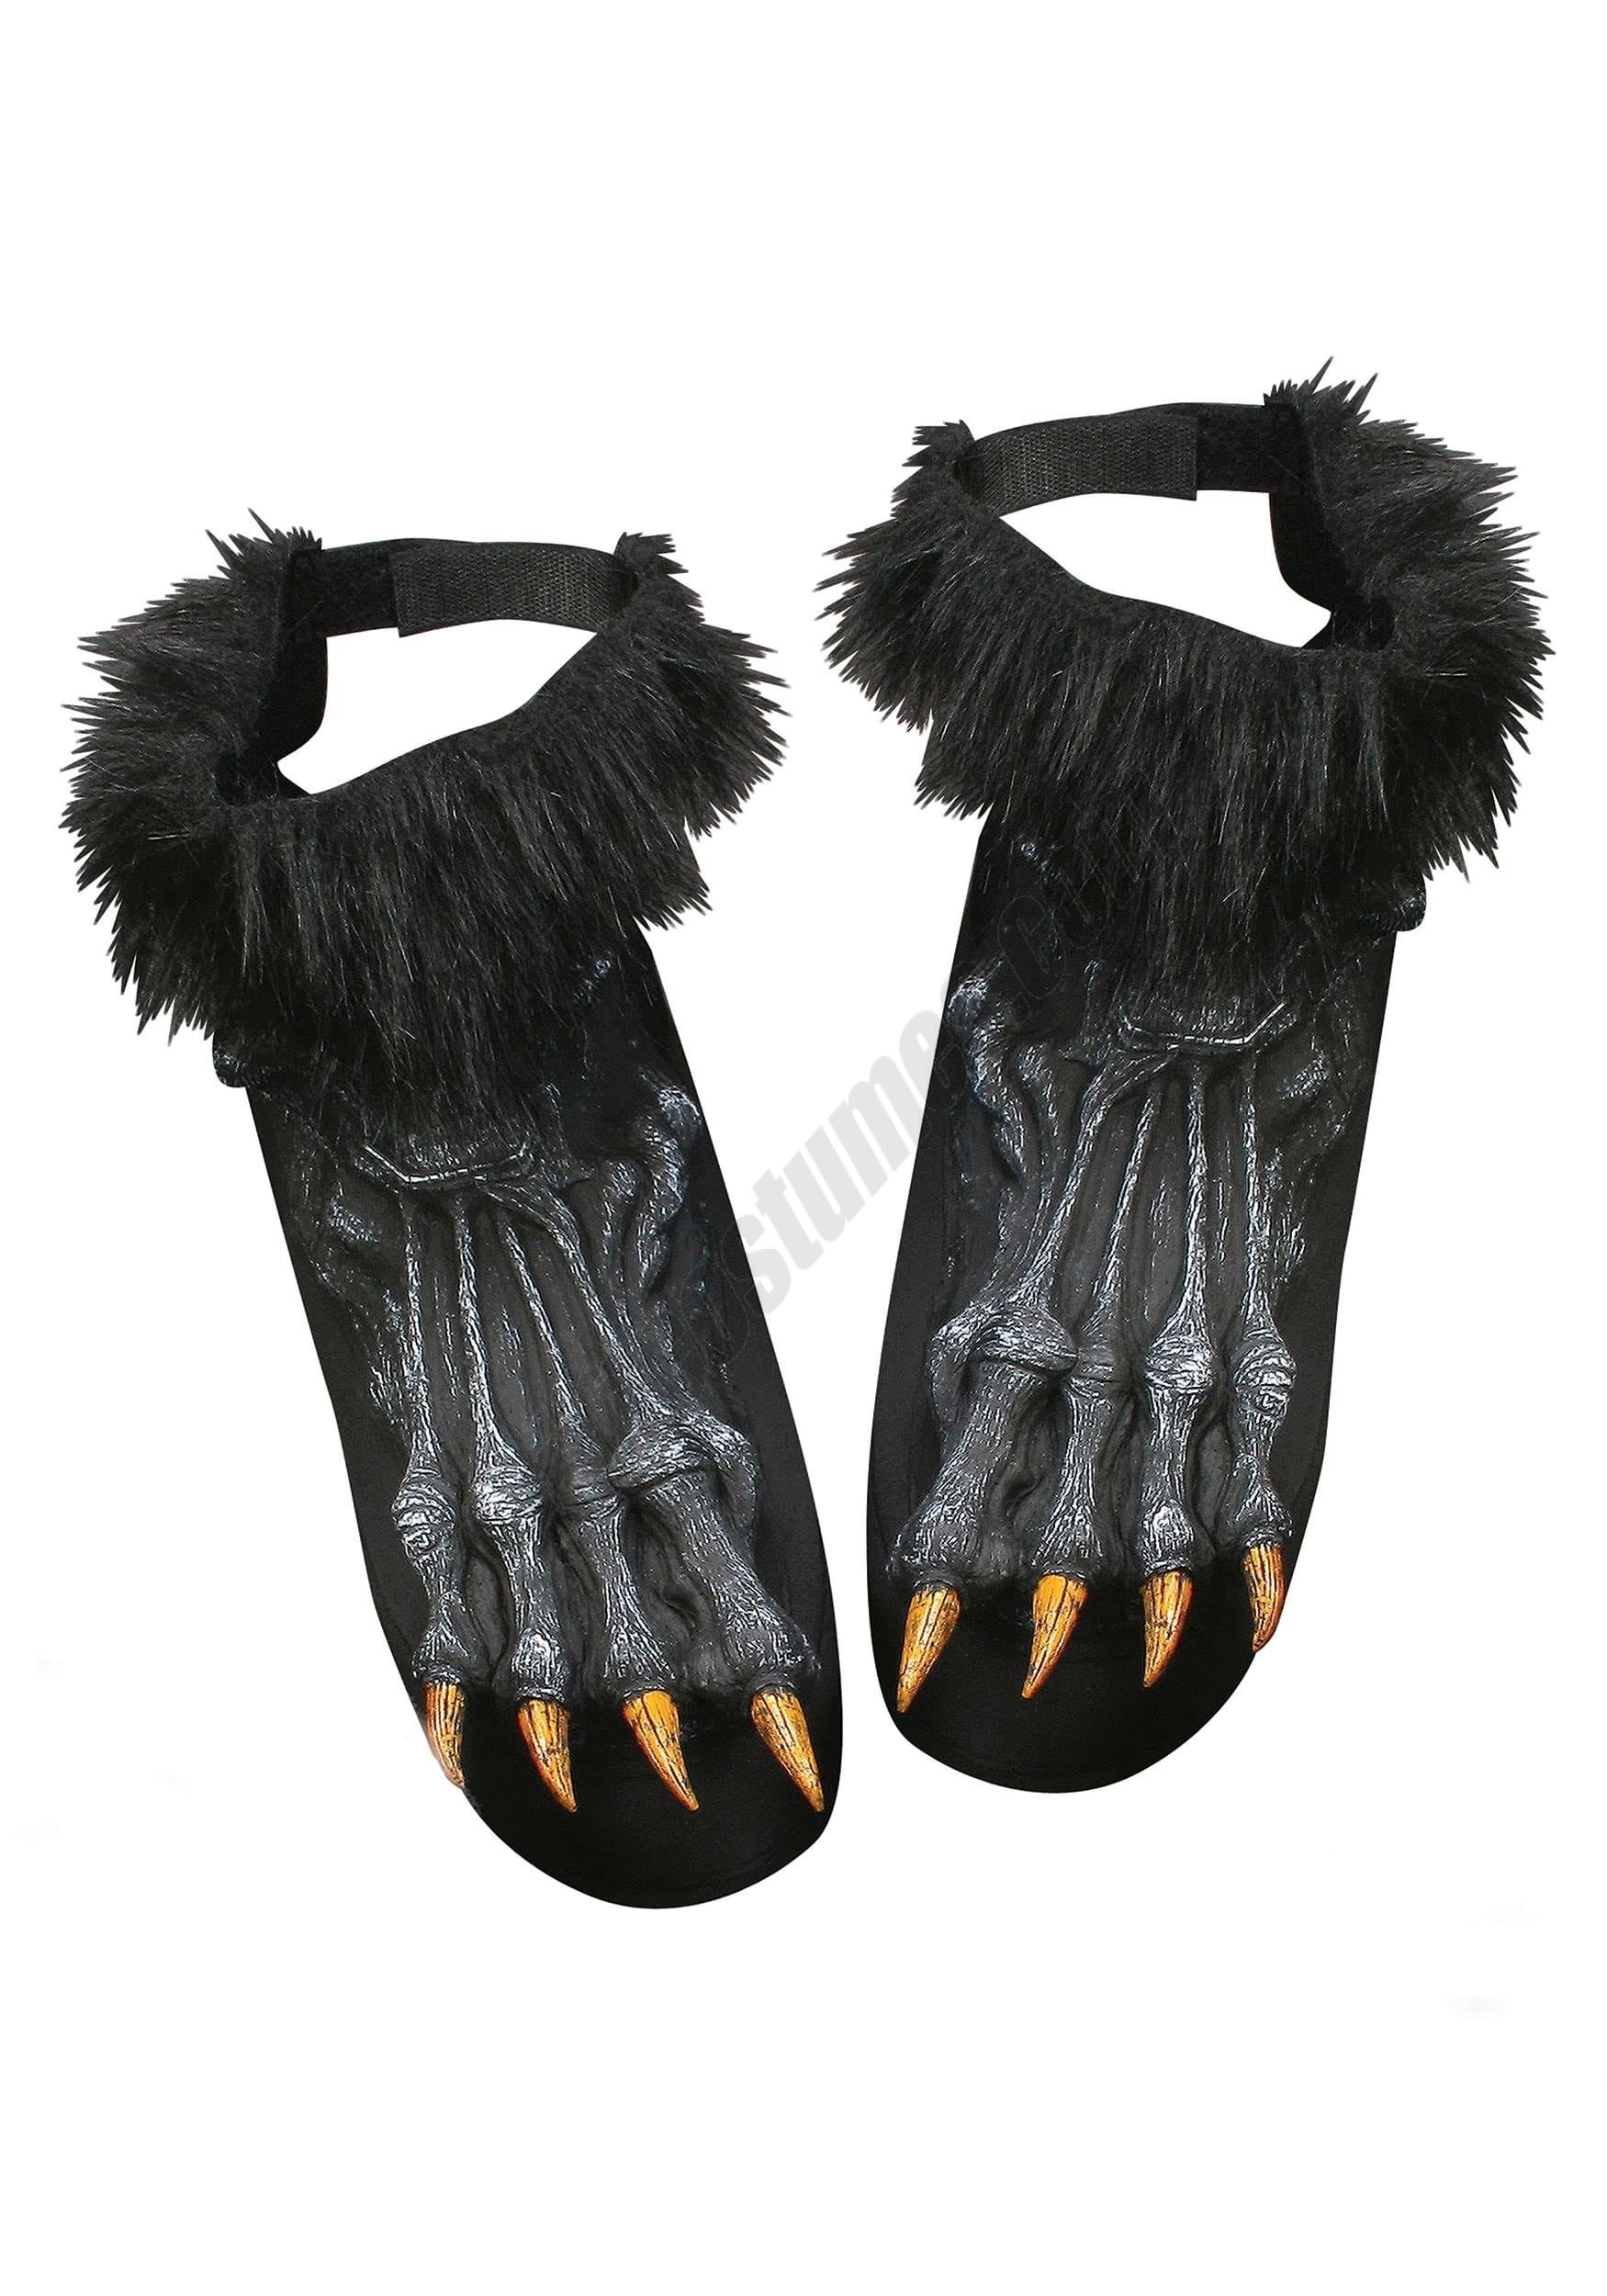 Black Werewolf Shoe Covers Promotions - Black Werewolf Shoe Covers Promotions